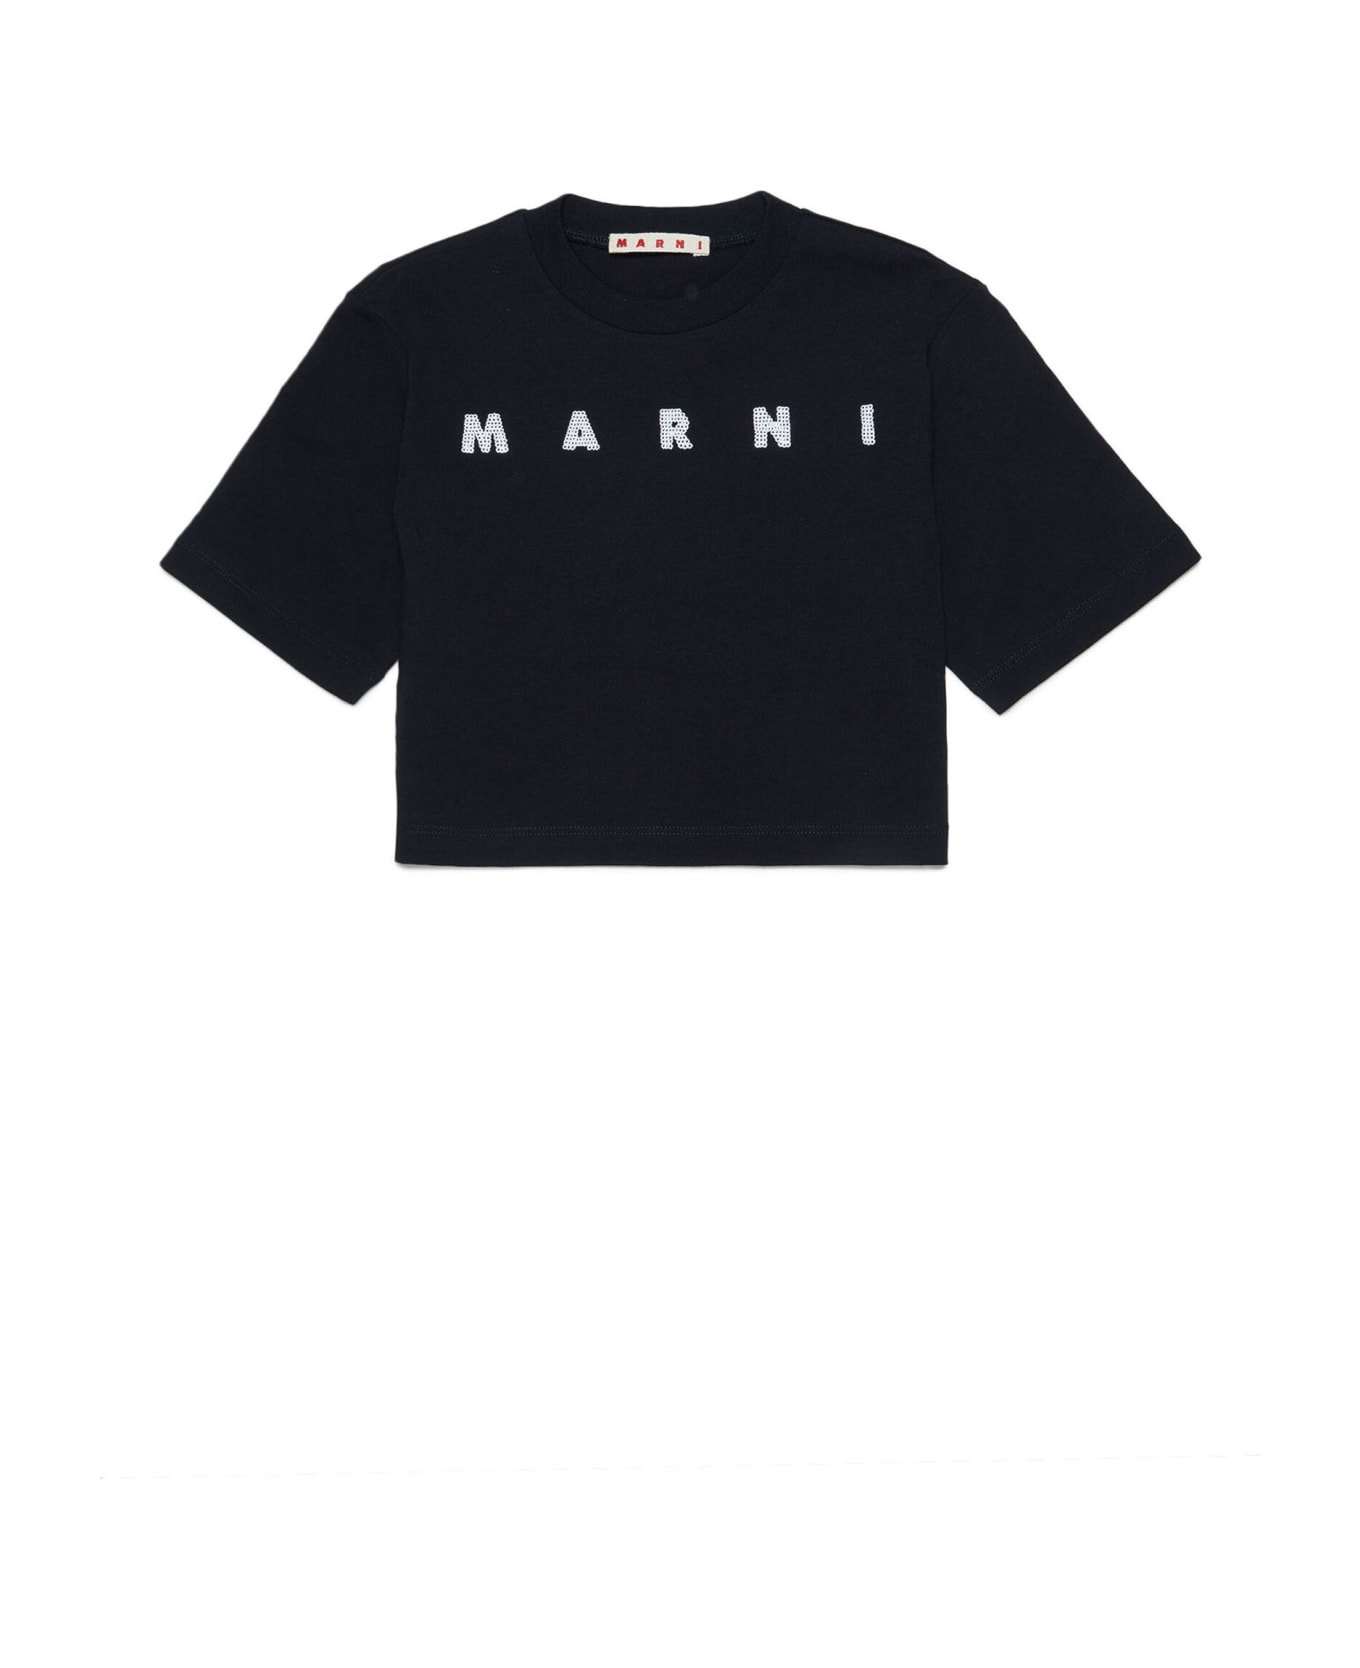 Marni Mt209f T-shirt Marni Black Jersey Cropped T-shirt With Sequin Logo - Black